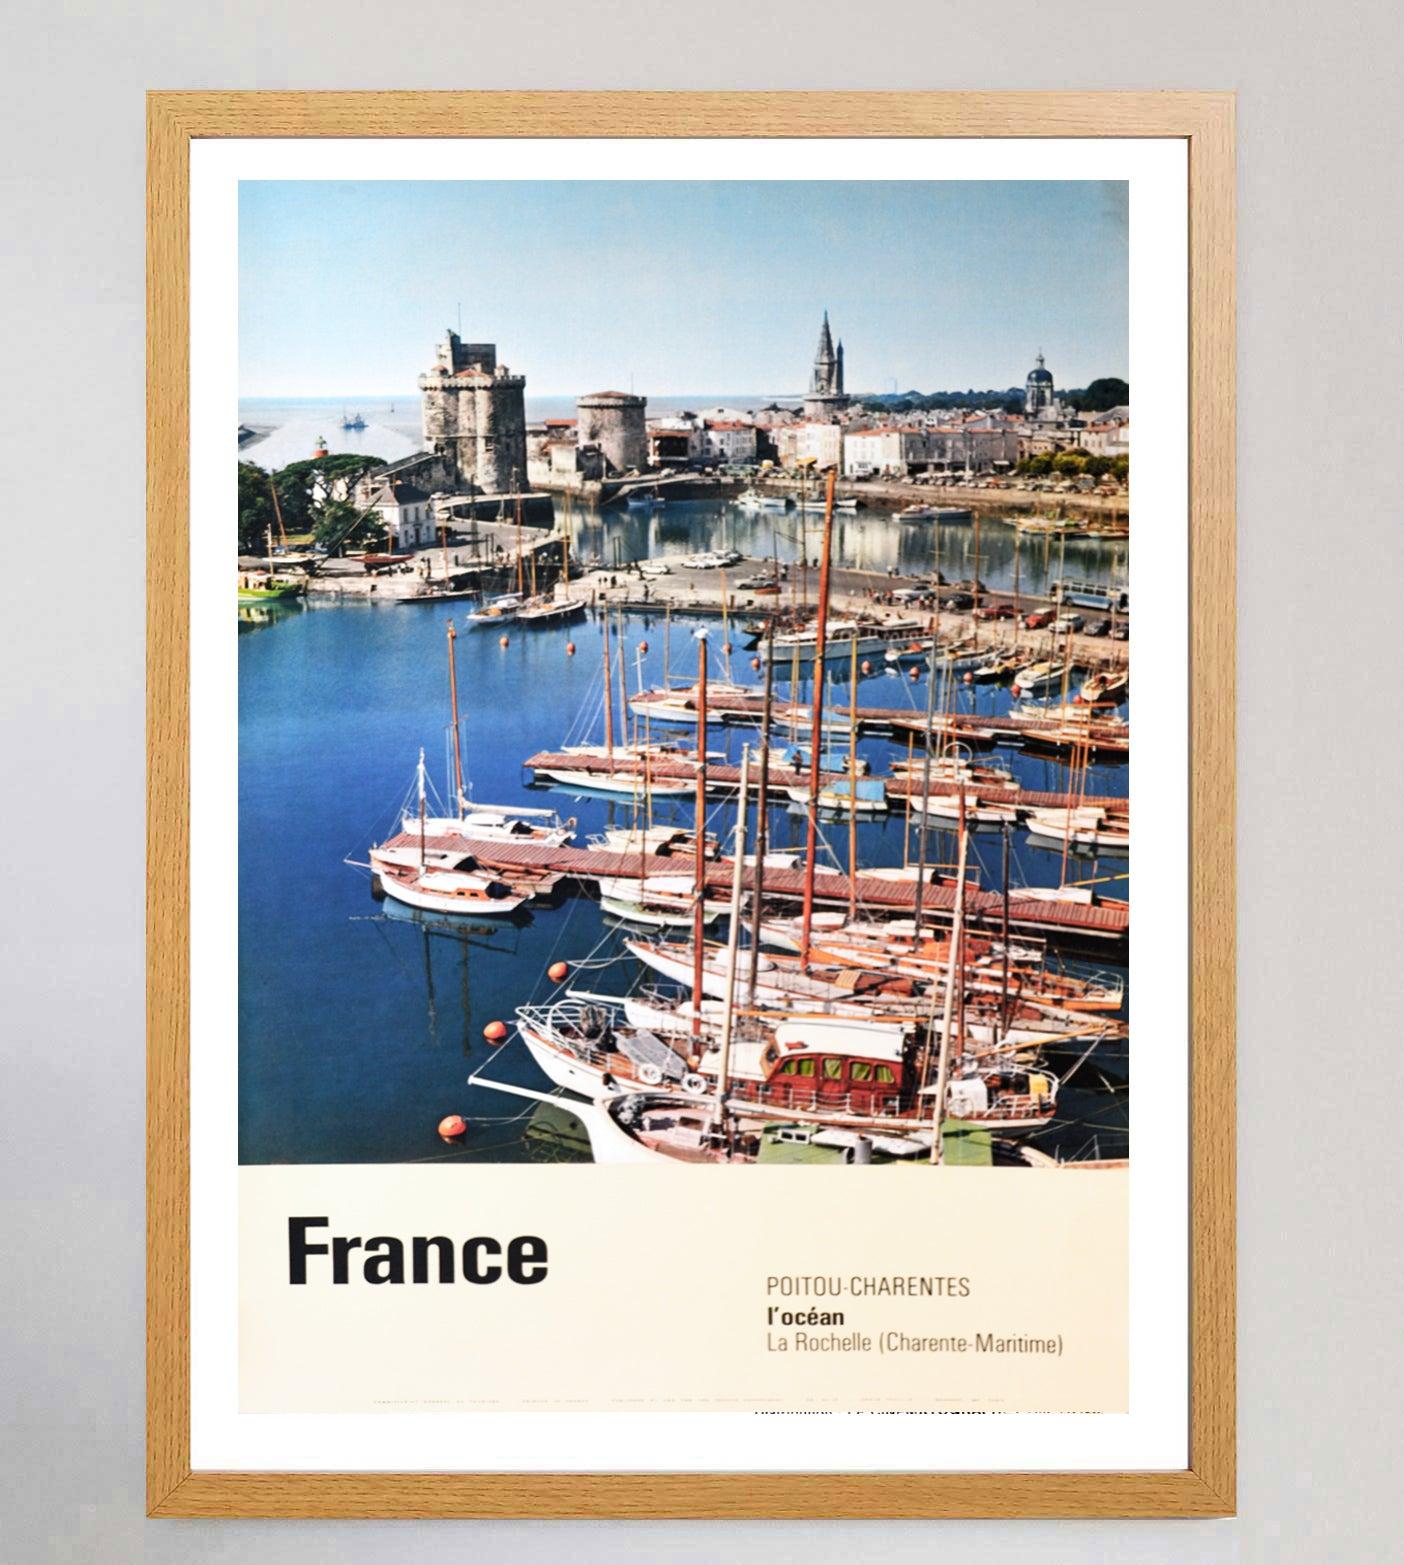 French 1963 France Poitou Charentes Original Vintage Poster For Sale